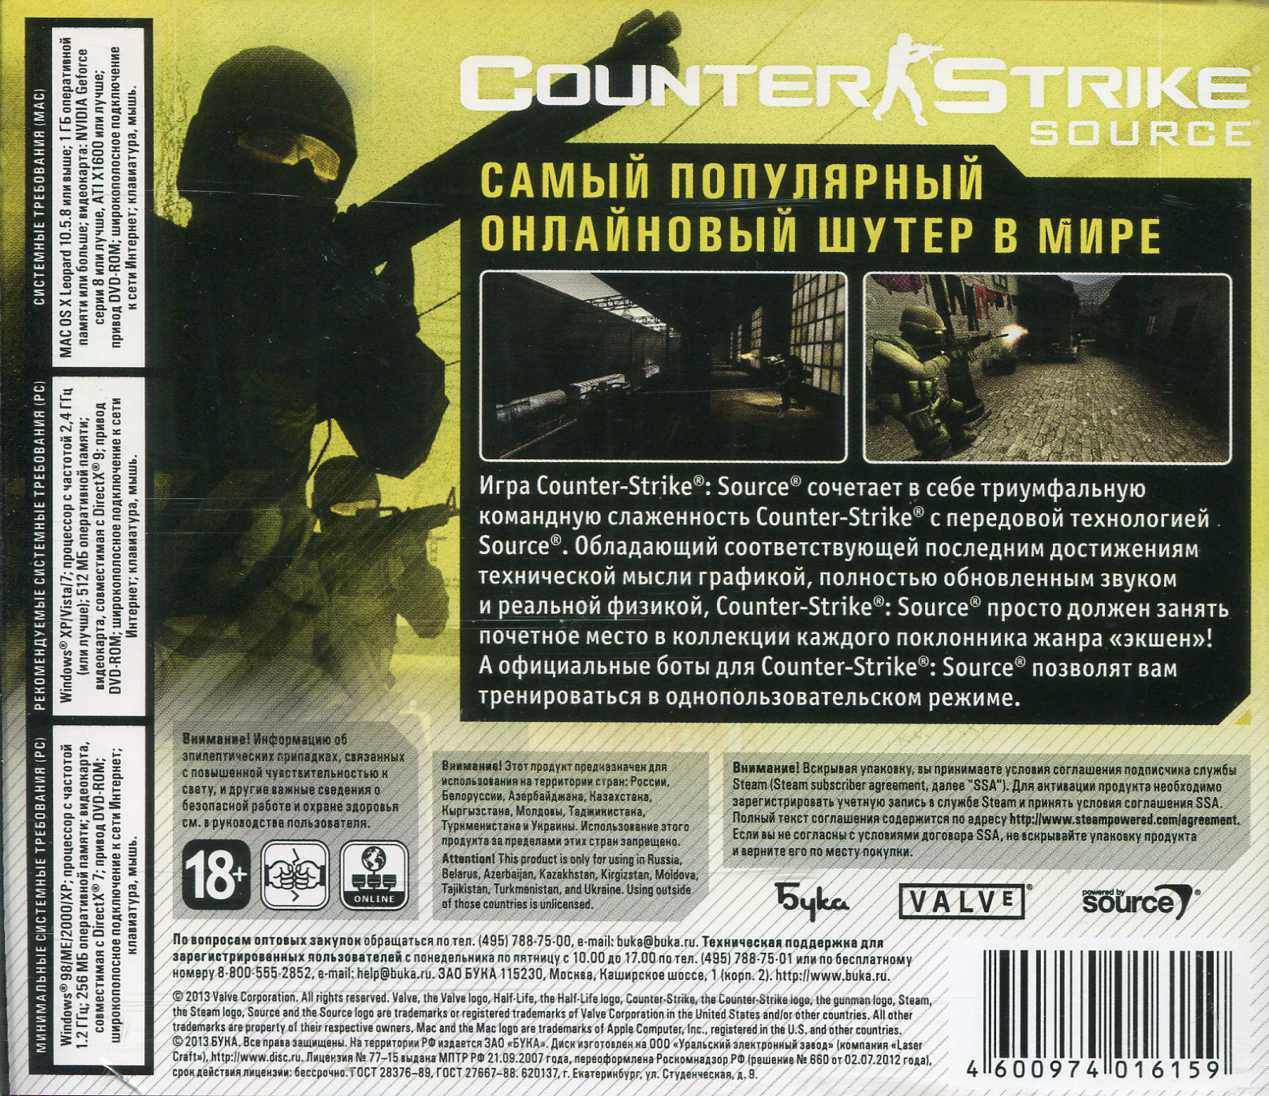 cd key code for counter strike 1.6